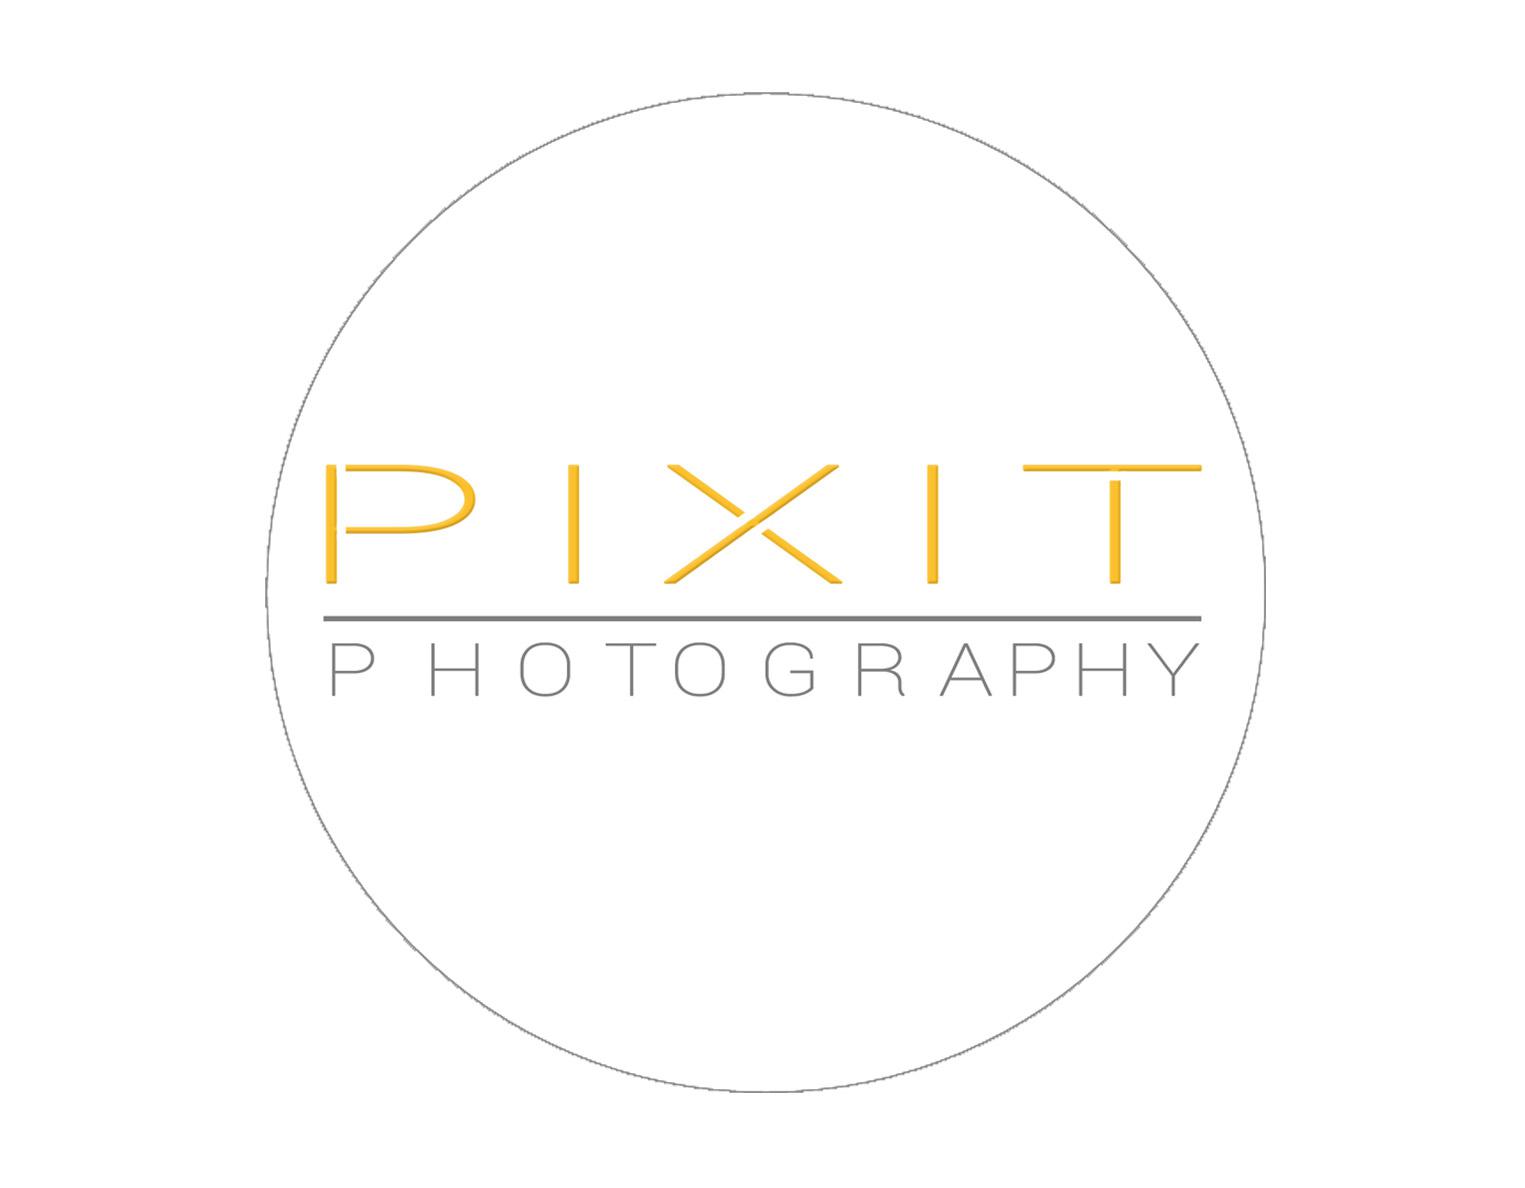 Pixit Photography Logo